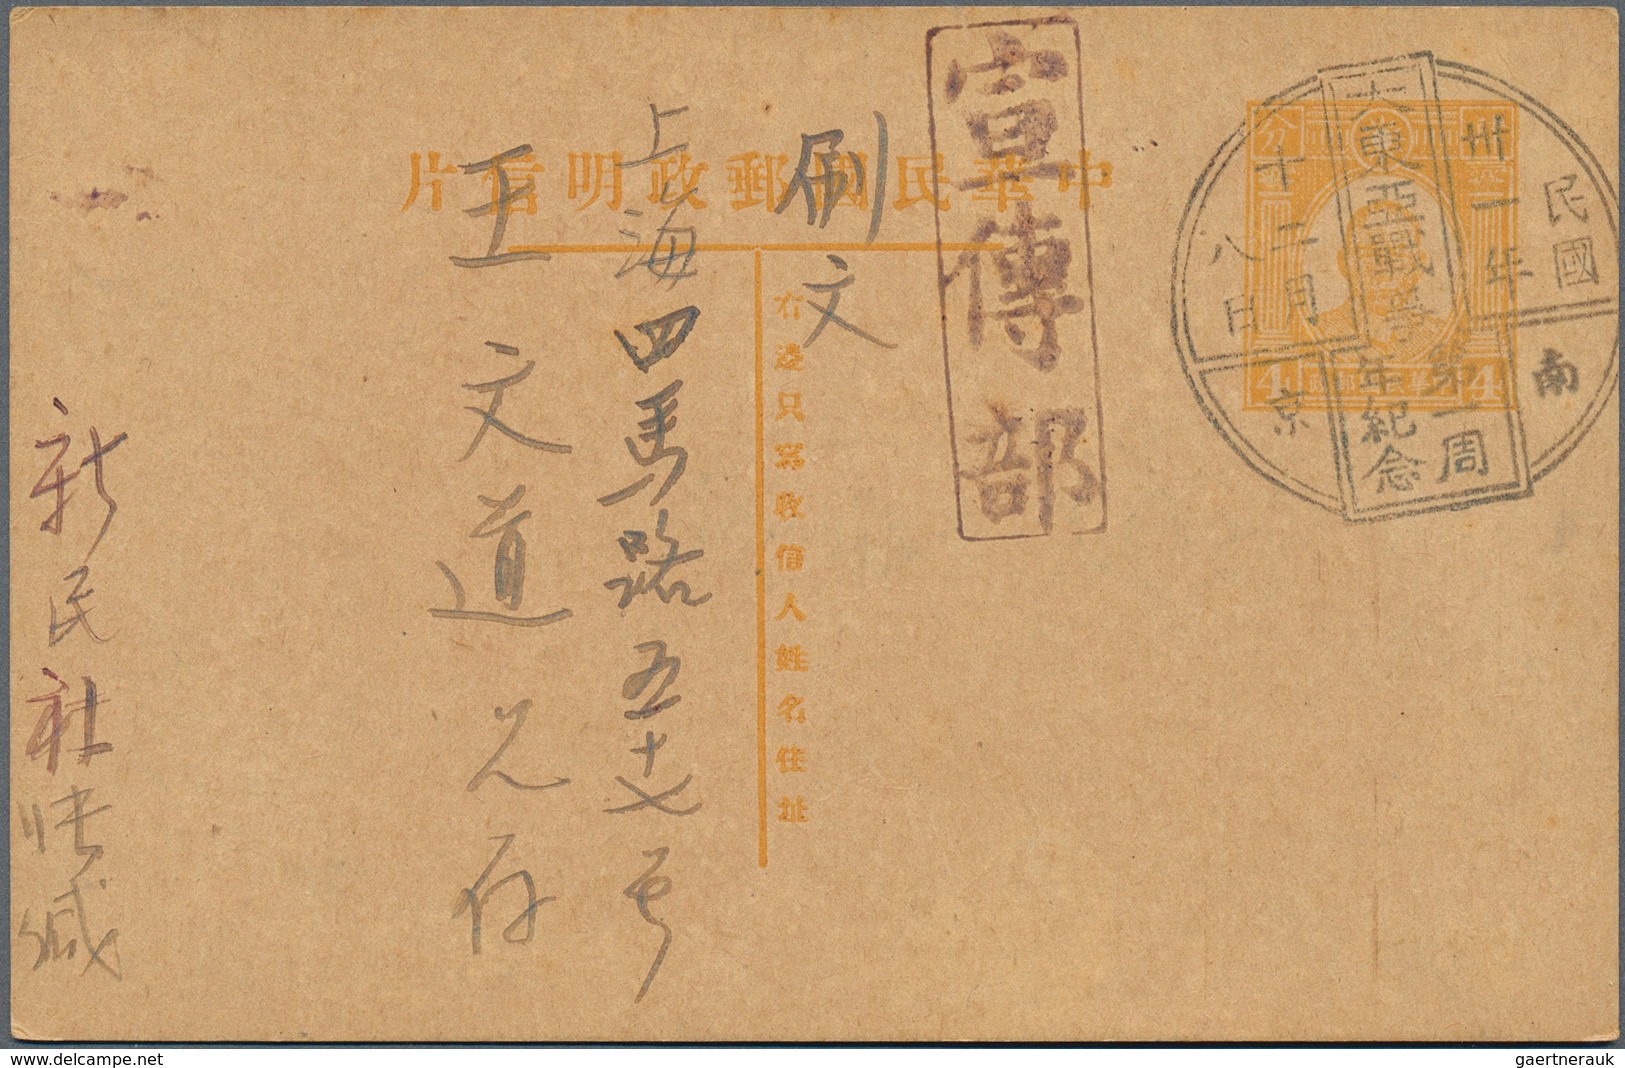 22935 Japanische Besetzung  WK II - China - Zentralchina / Central China: 1942/43, covers (3, inc. one reg